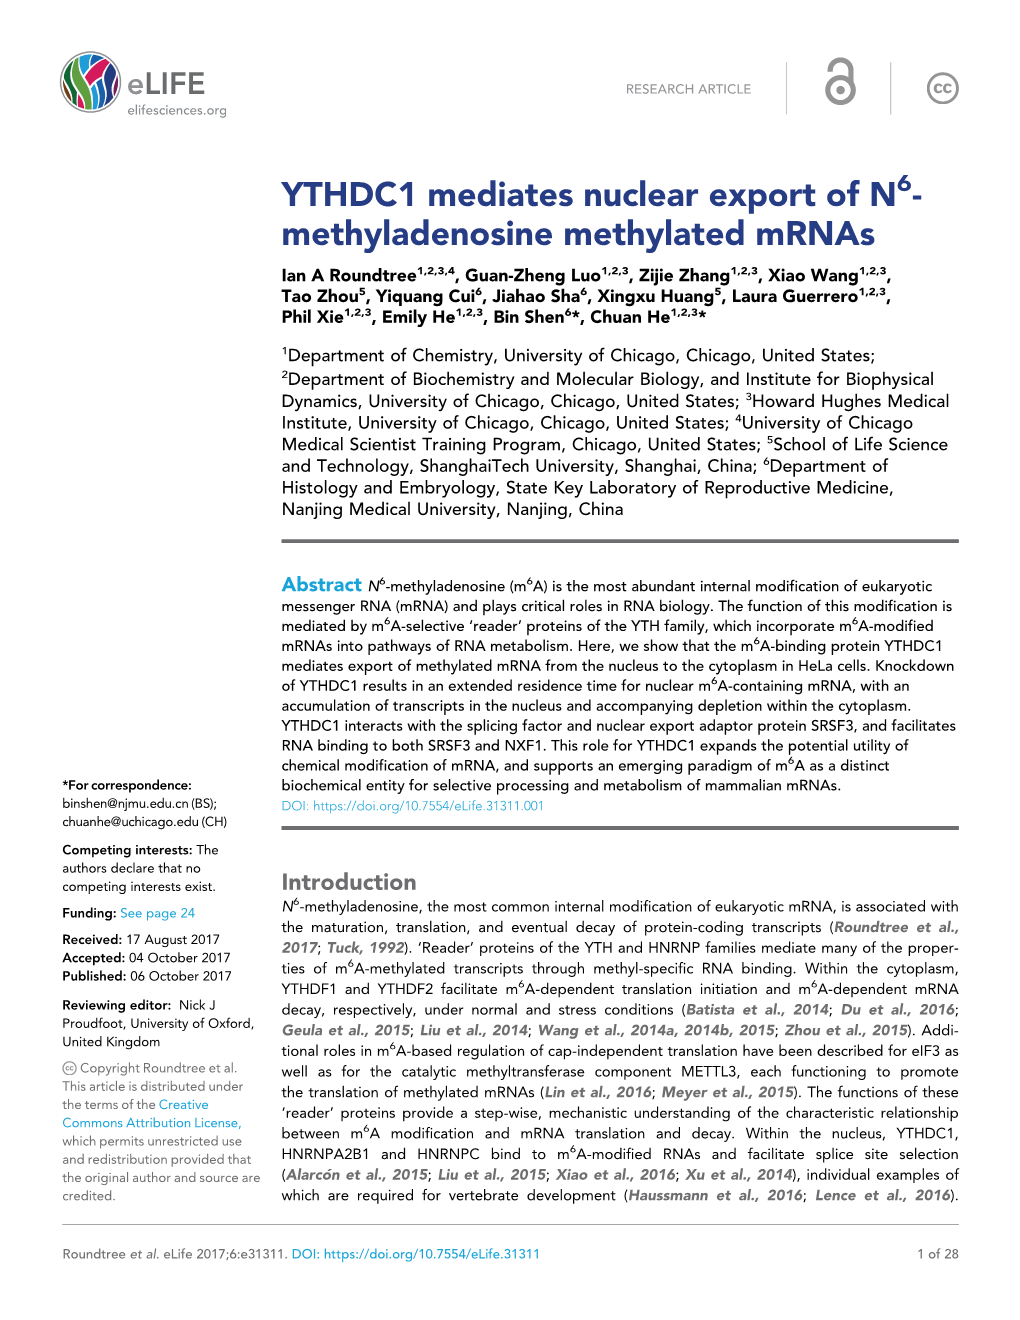 YTHDC1 Mediates Nuclear Export of N